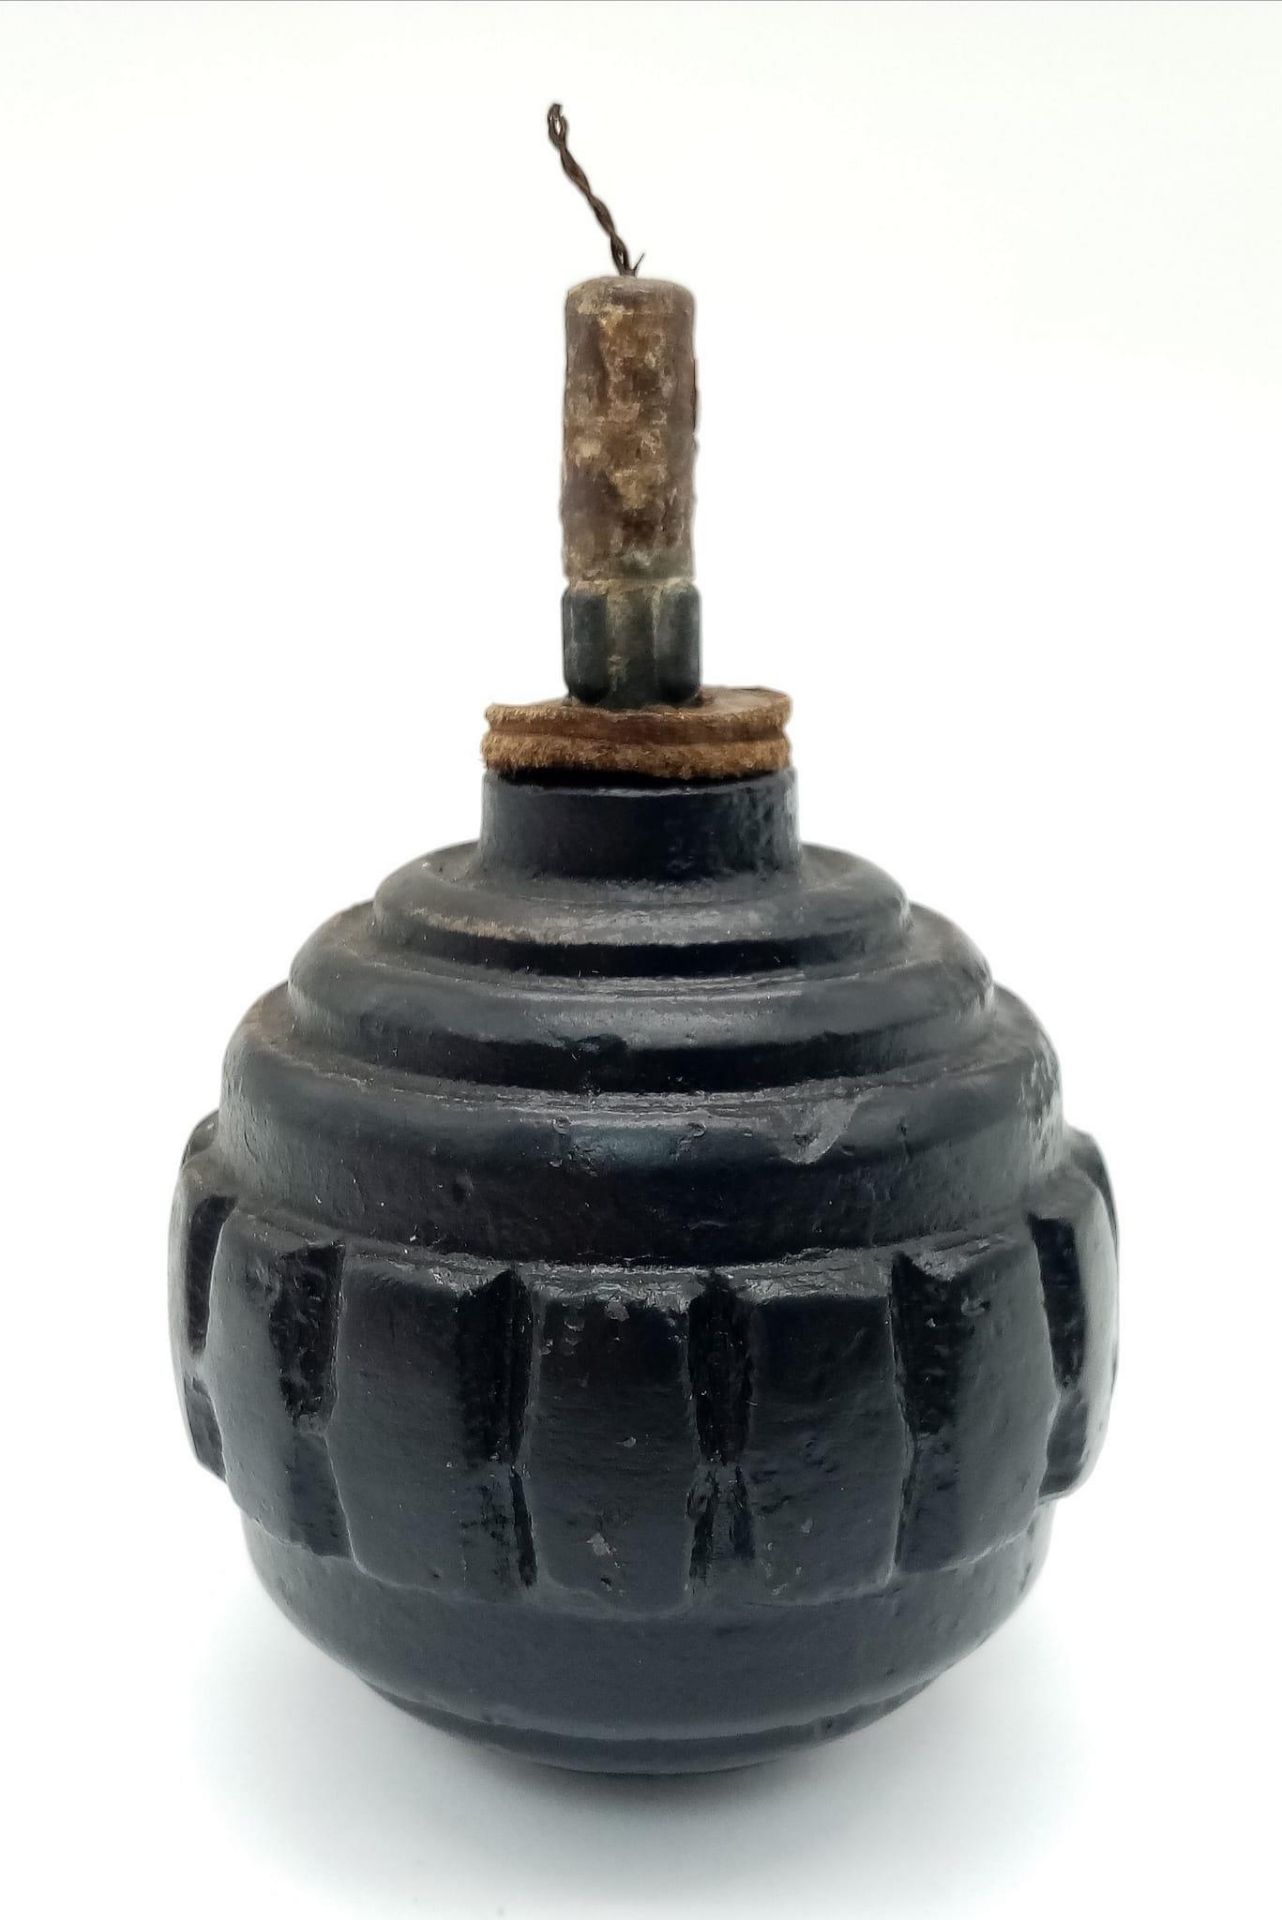 INERT 1915 Pattern Imperial German Kugal (Ball) Grenade. UK Mainland Sales Only.